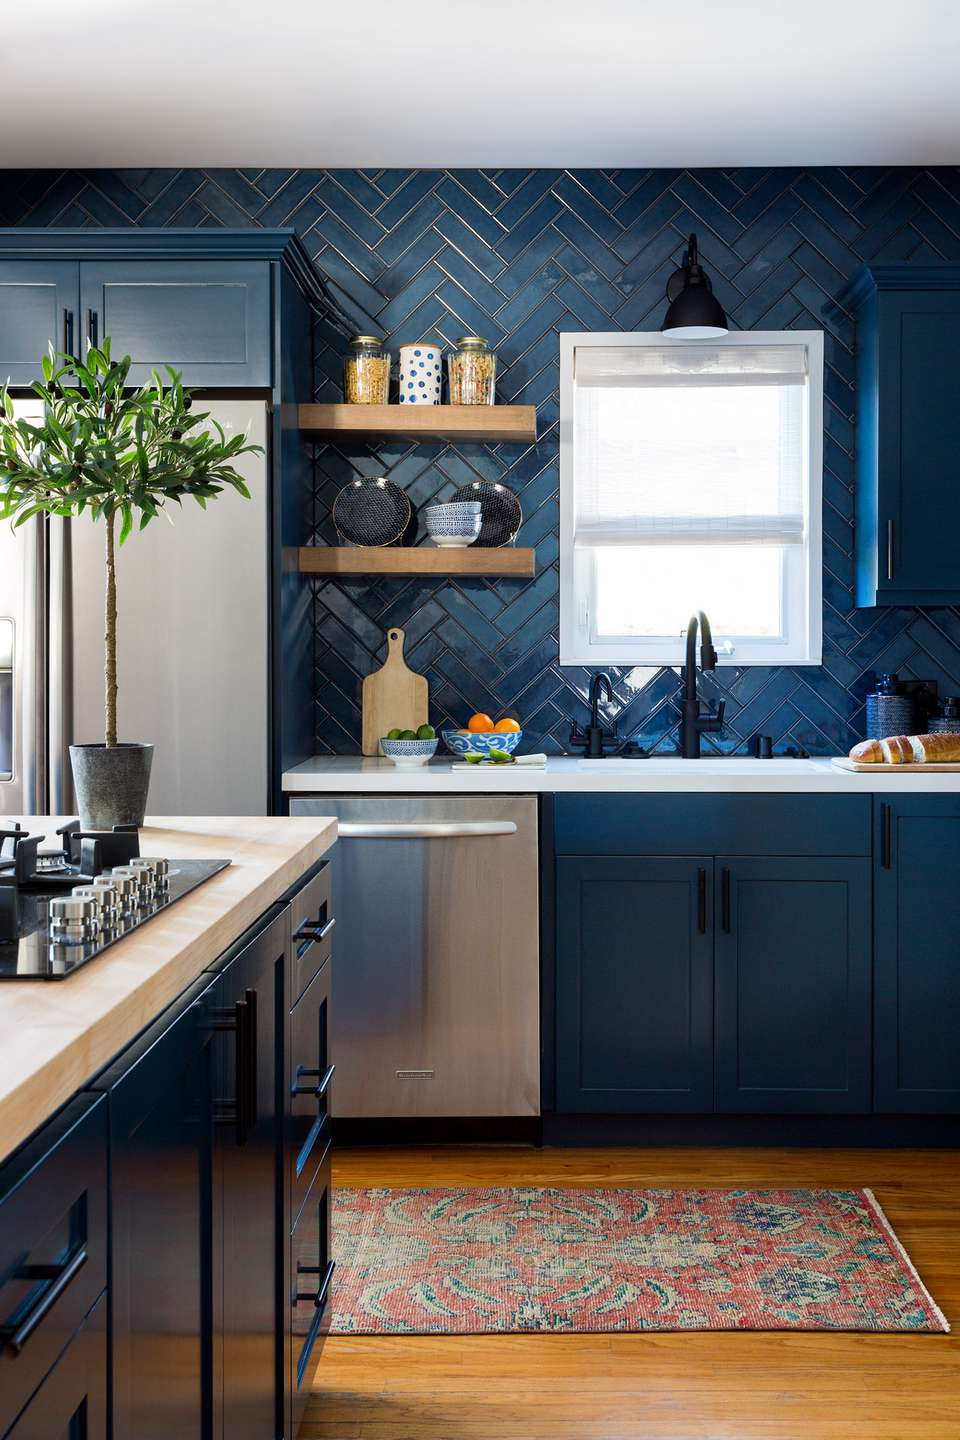 Blue Kitchen Tile Backsplash
 14 Kitchens With Herringbone Tile Backsplashes